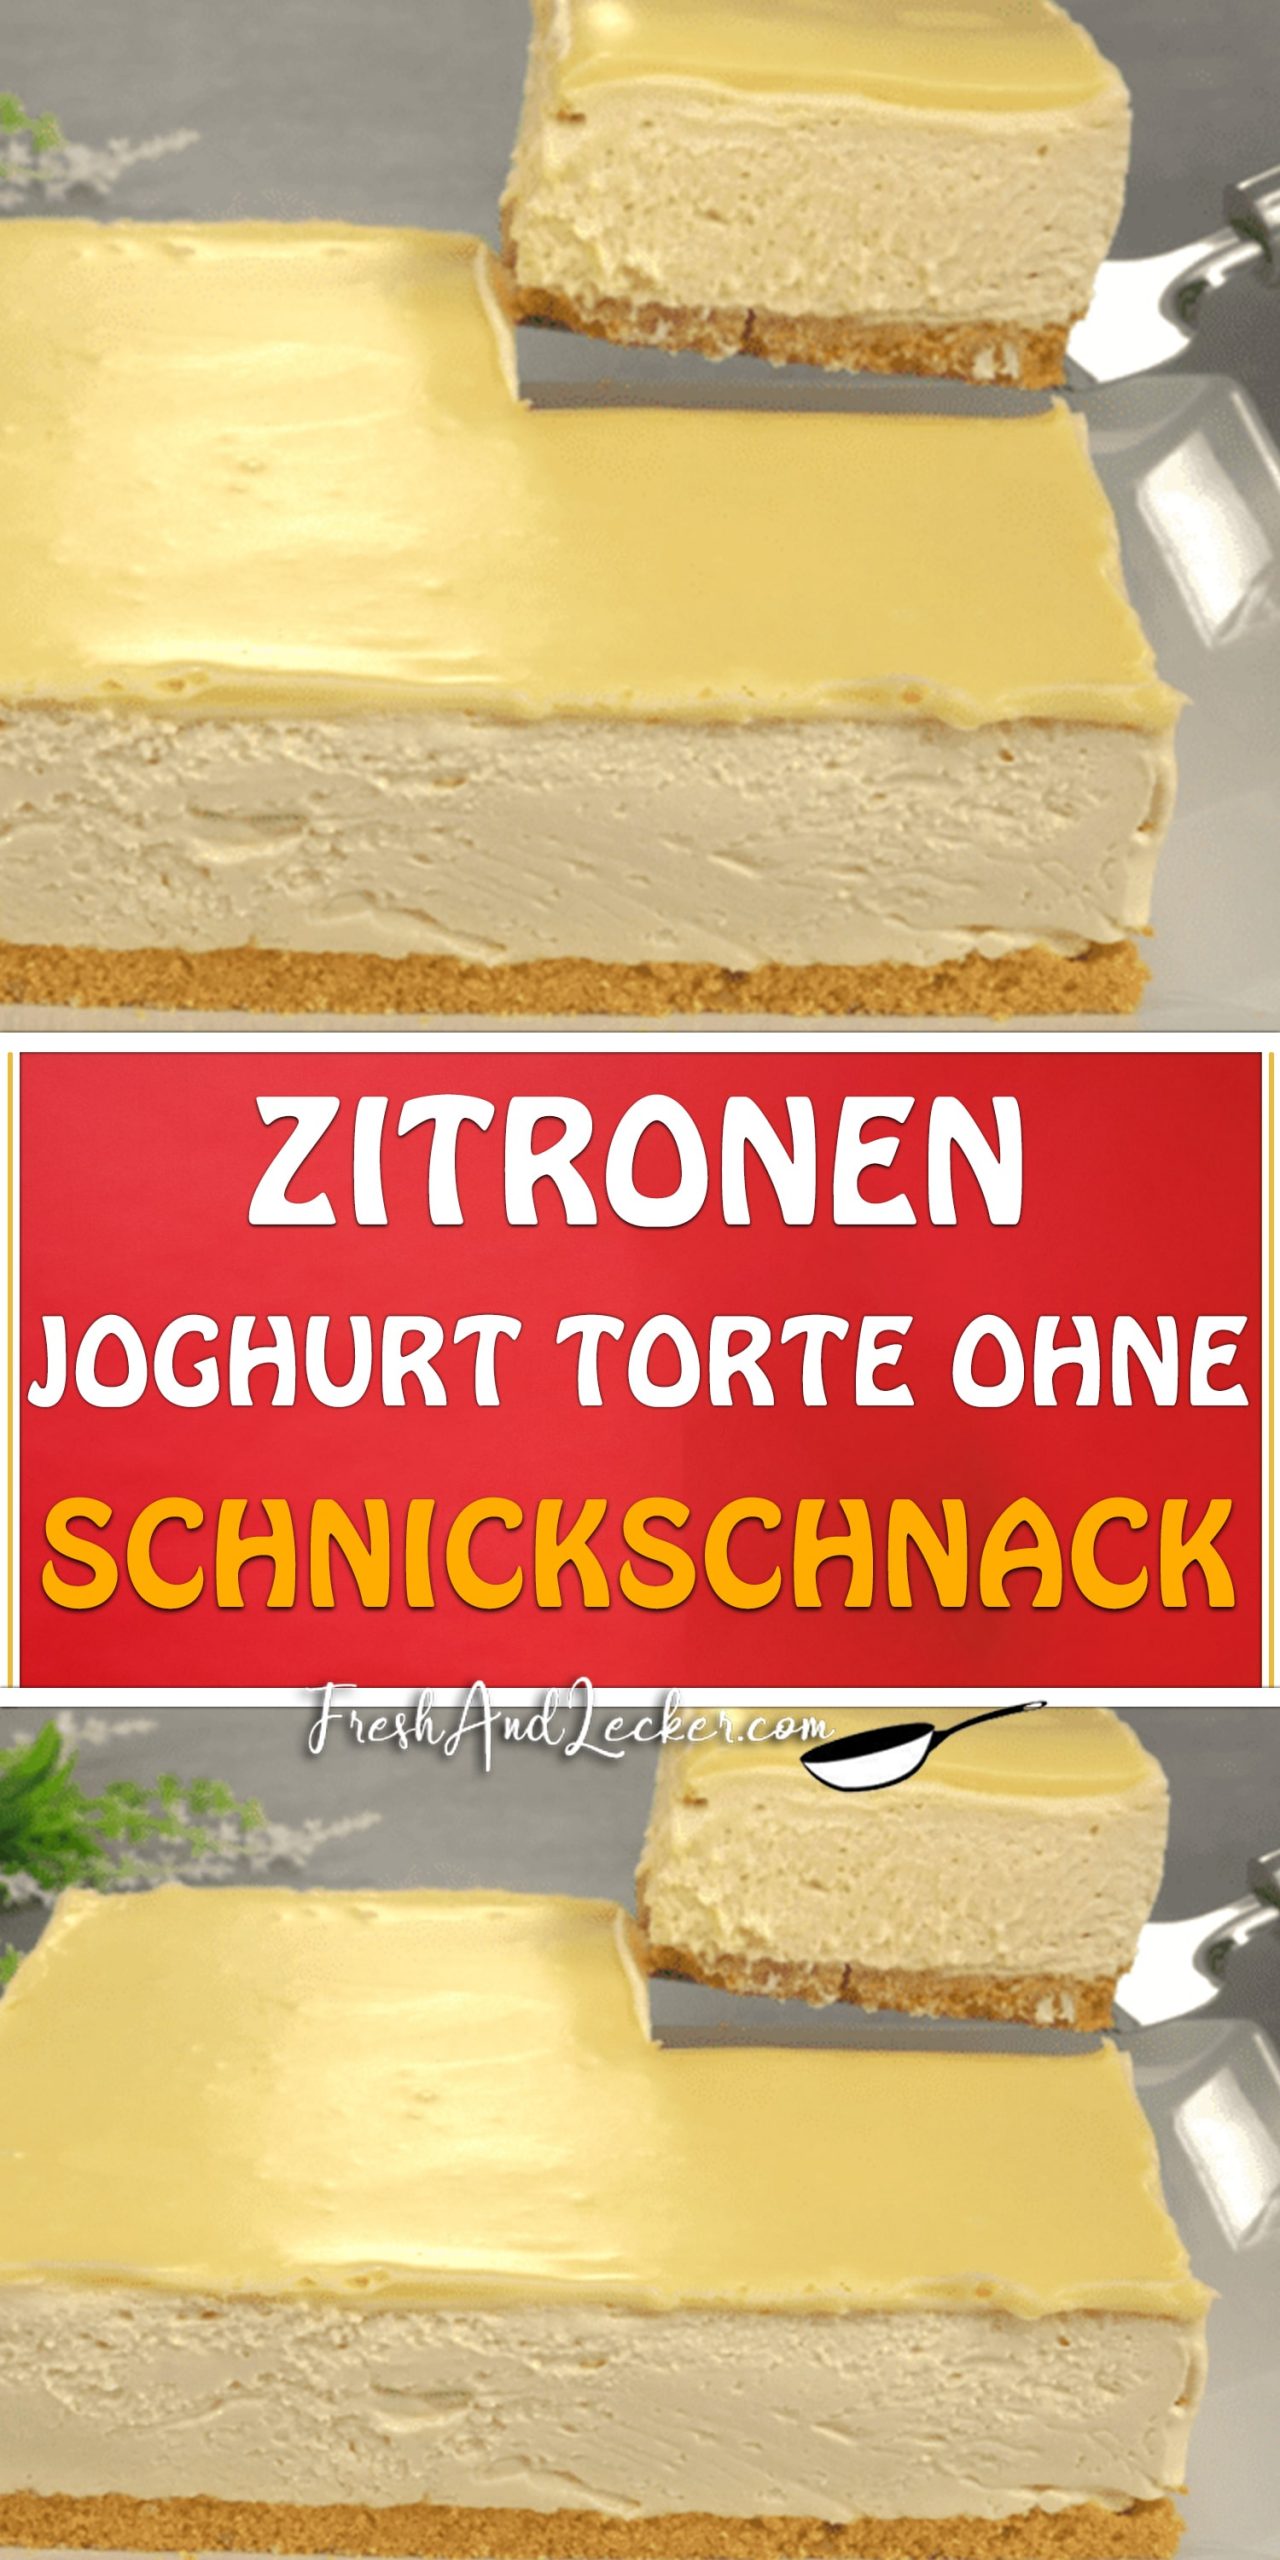 ZITRONEN JOGHURT TORTE OHNE SCHNICKSCHNACK ! - Fresh Lecker